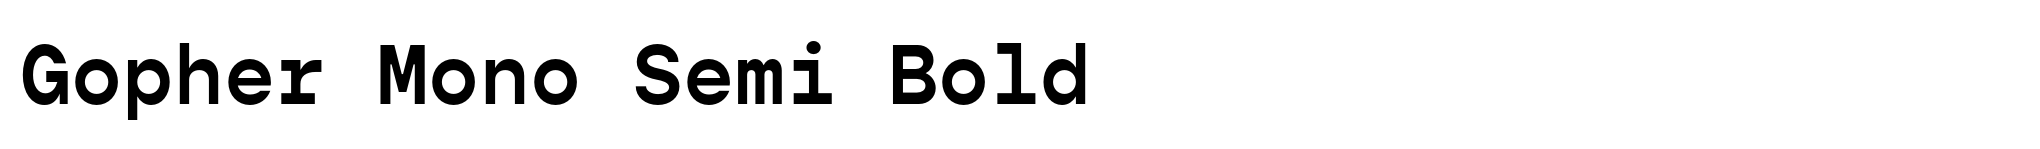 Gopher Mono Semi Bold image